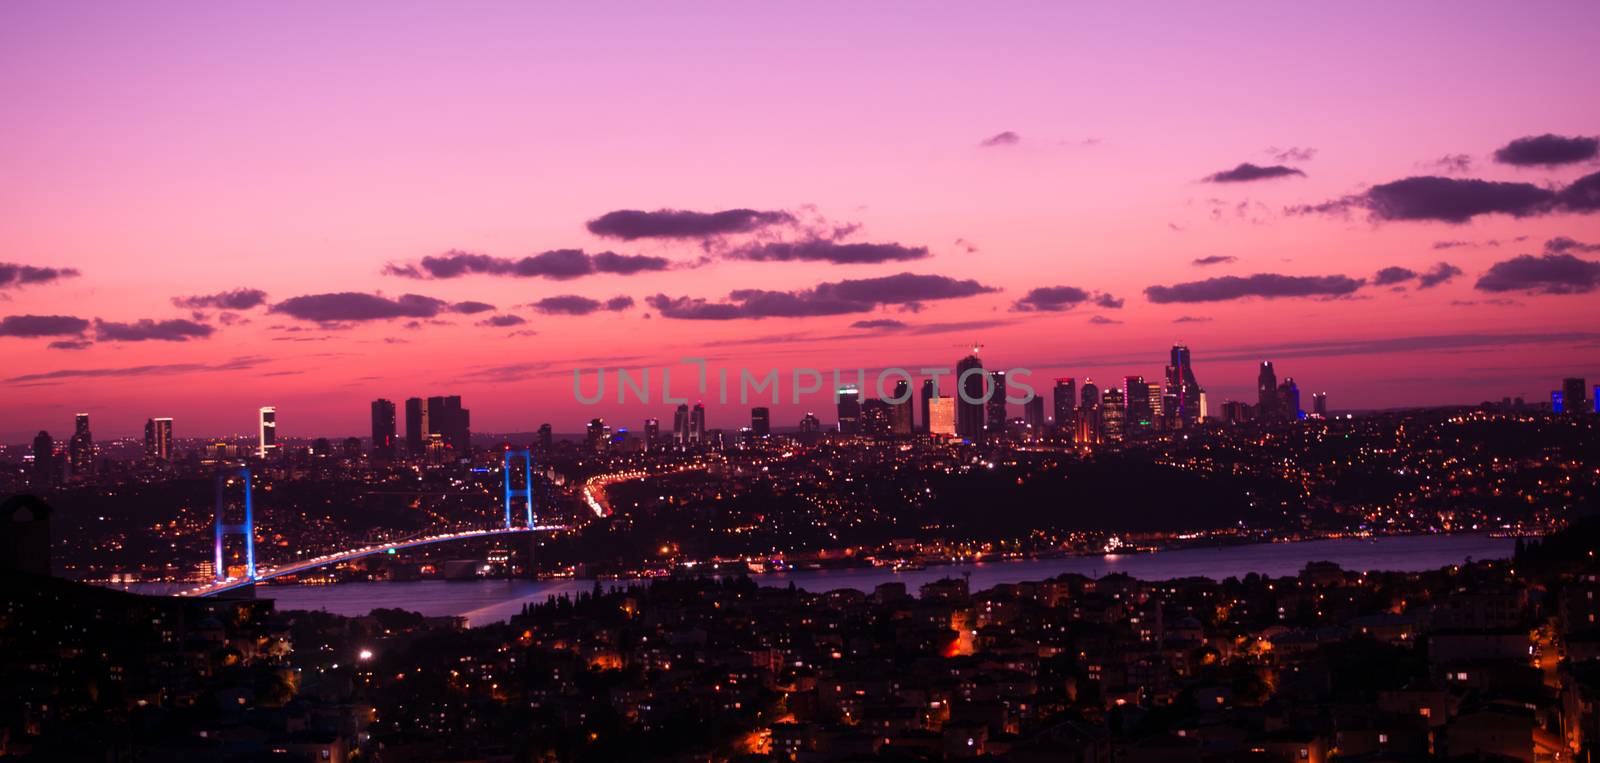 Istanbul Bosporus Bridge on sunset by berkay